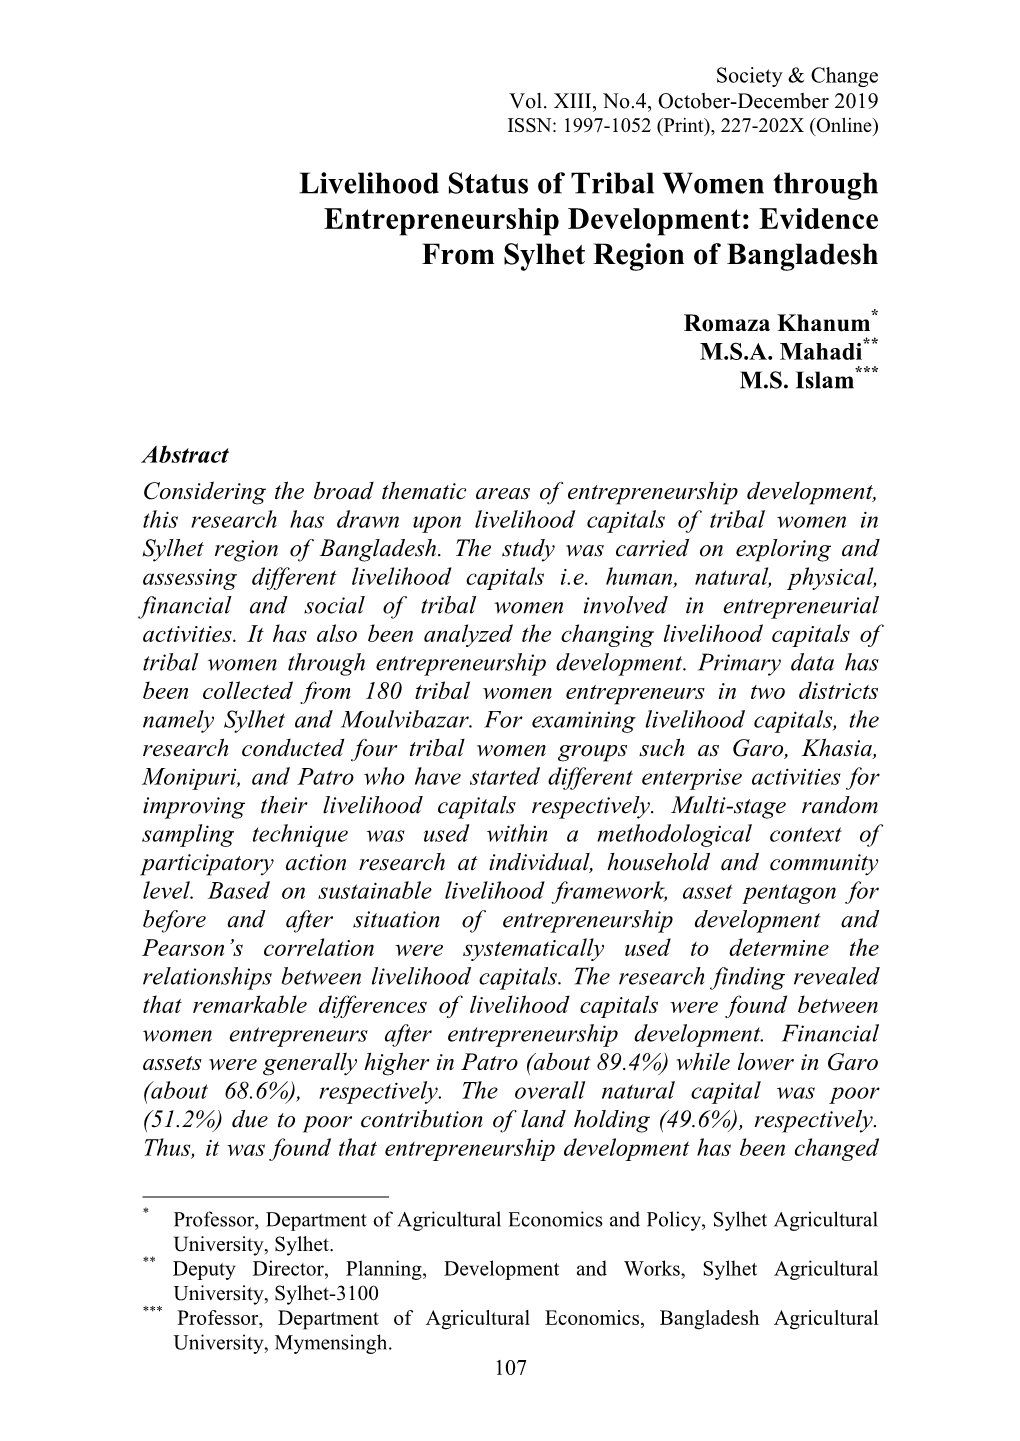 Evidence from Sylhet Region of Bangladesh